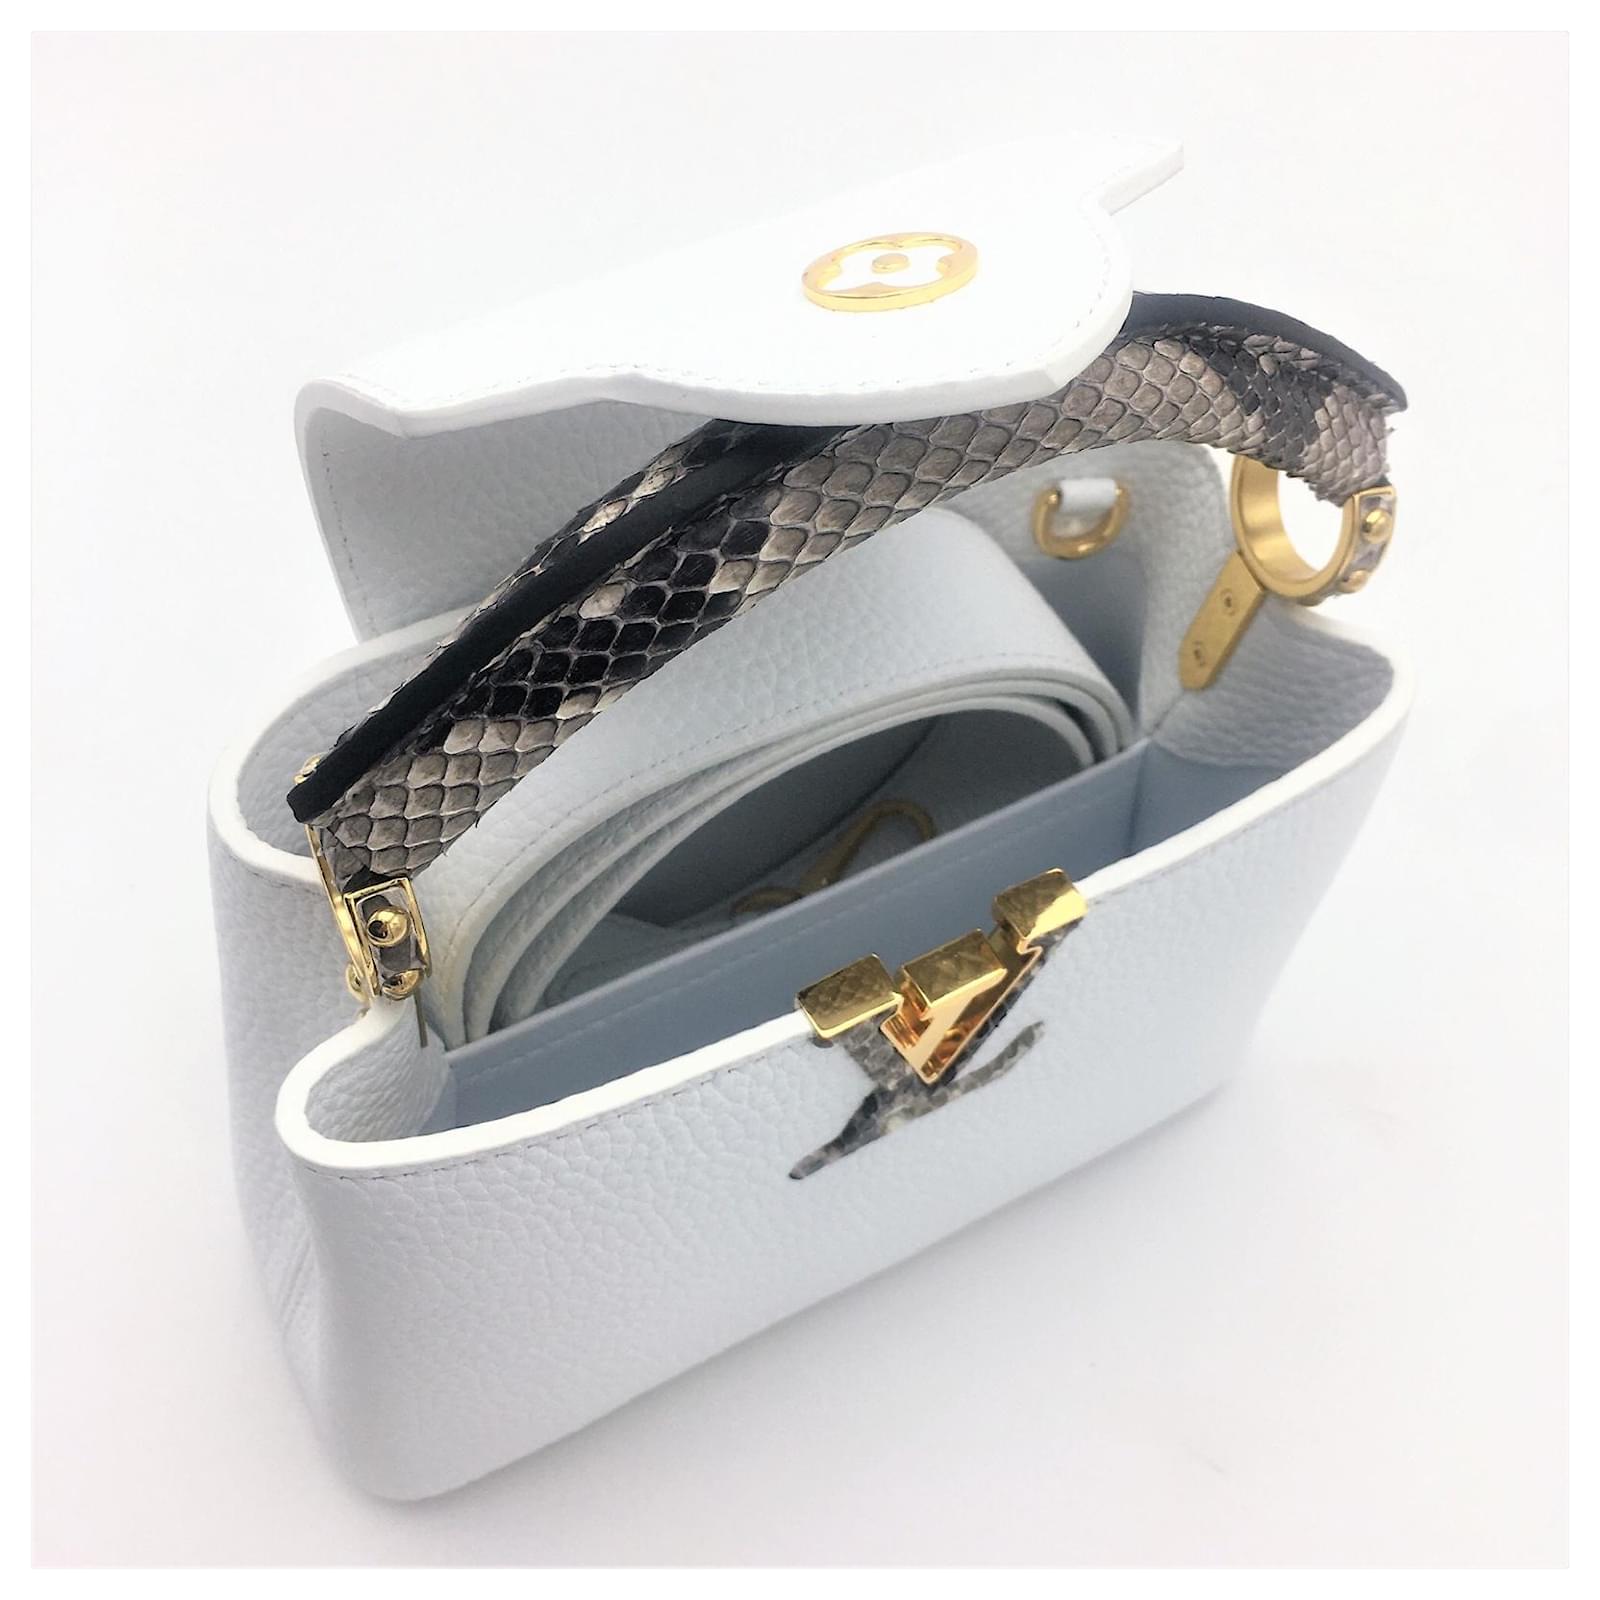 Louis Vuitton White Taurillon Leather Capucines Mini Bag at